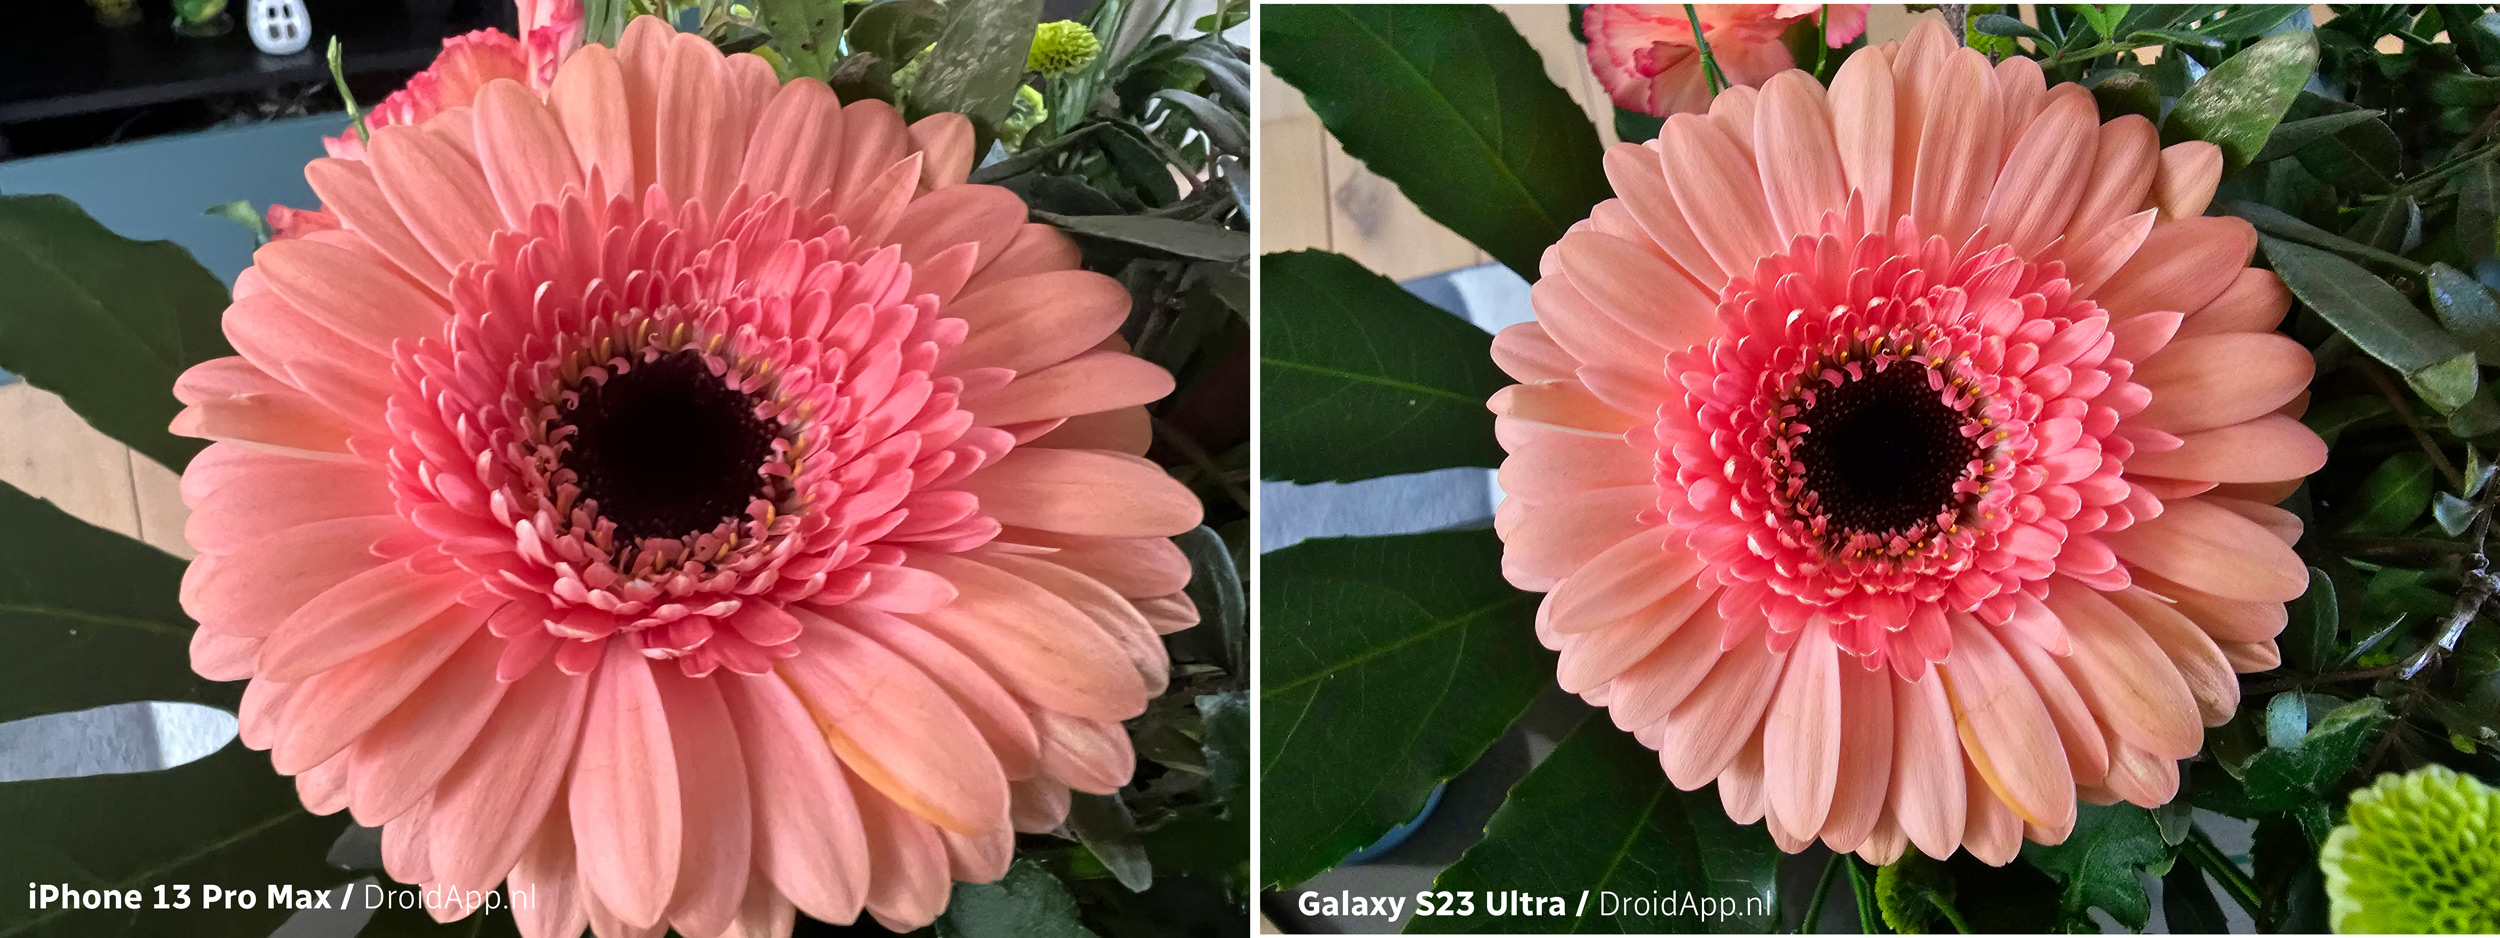 Samsung Galaxy S23 Ultra vs iPhone 13 Pro Max